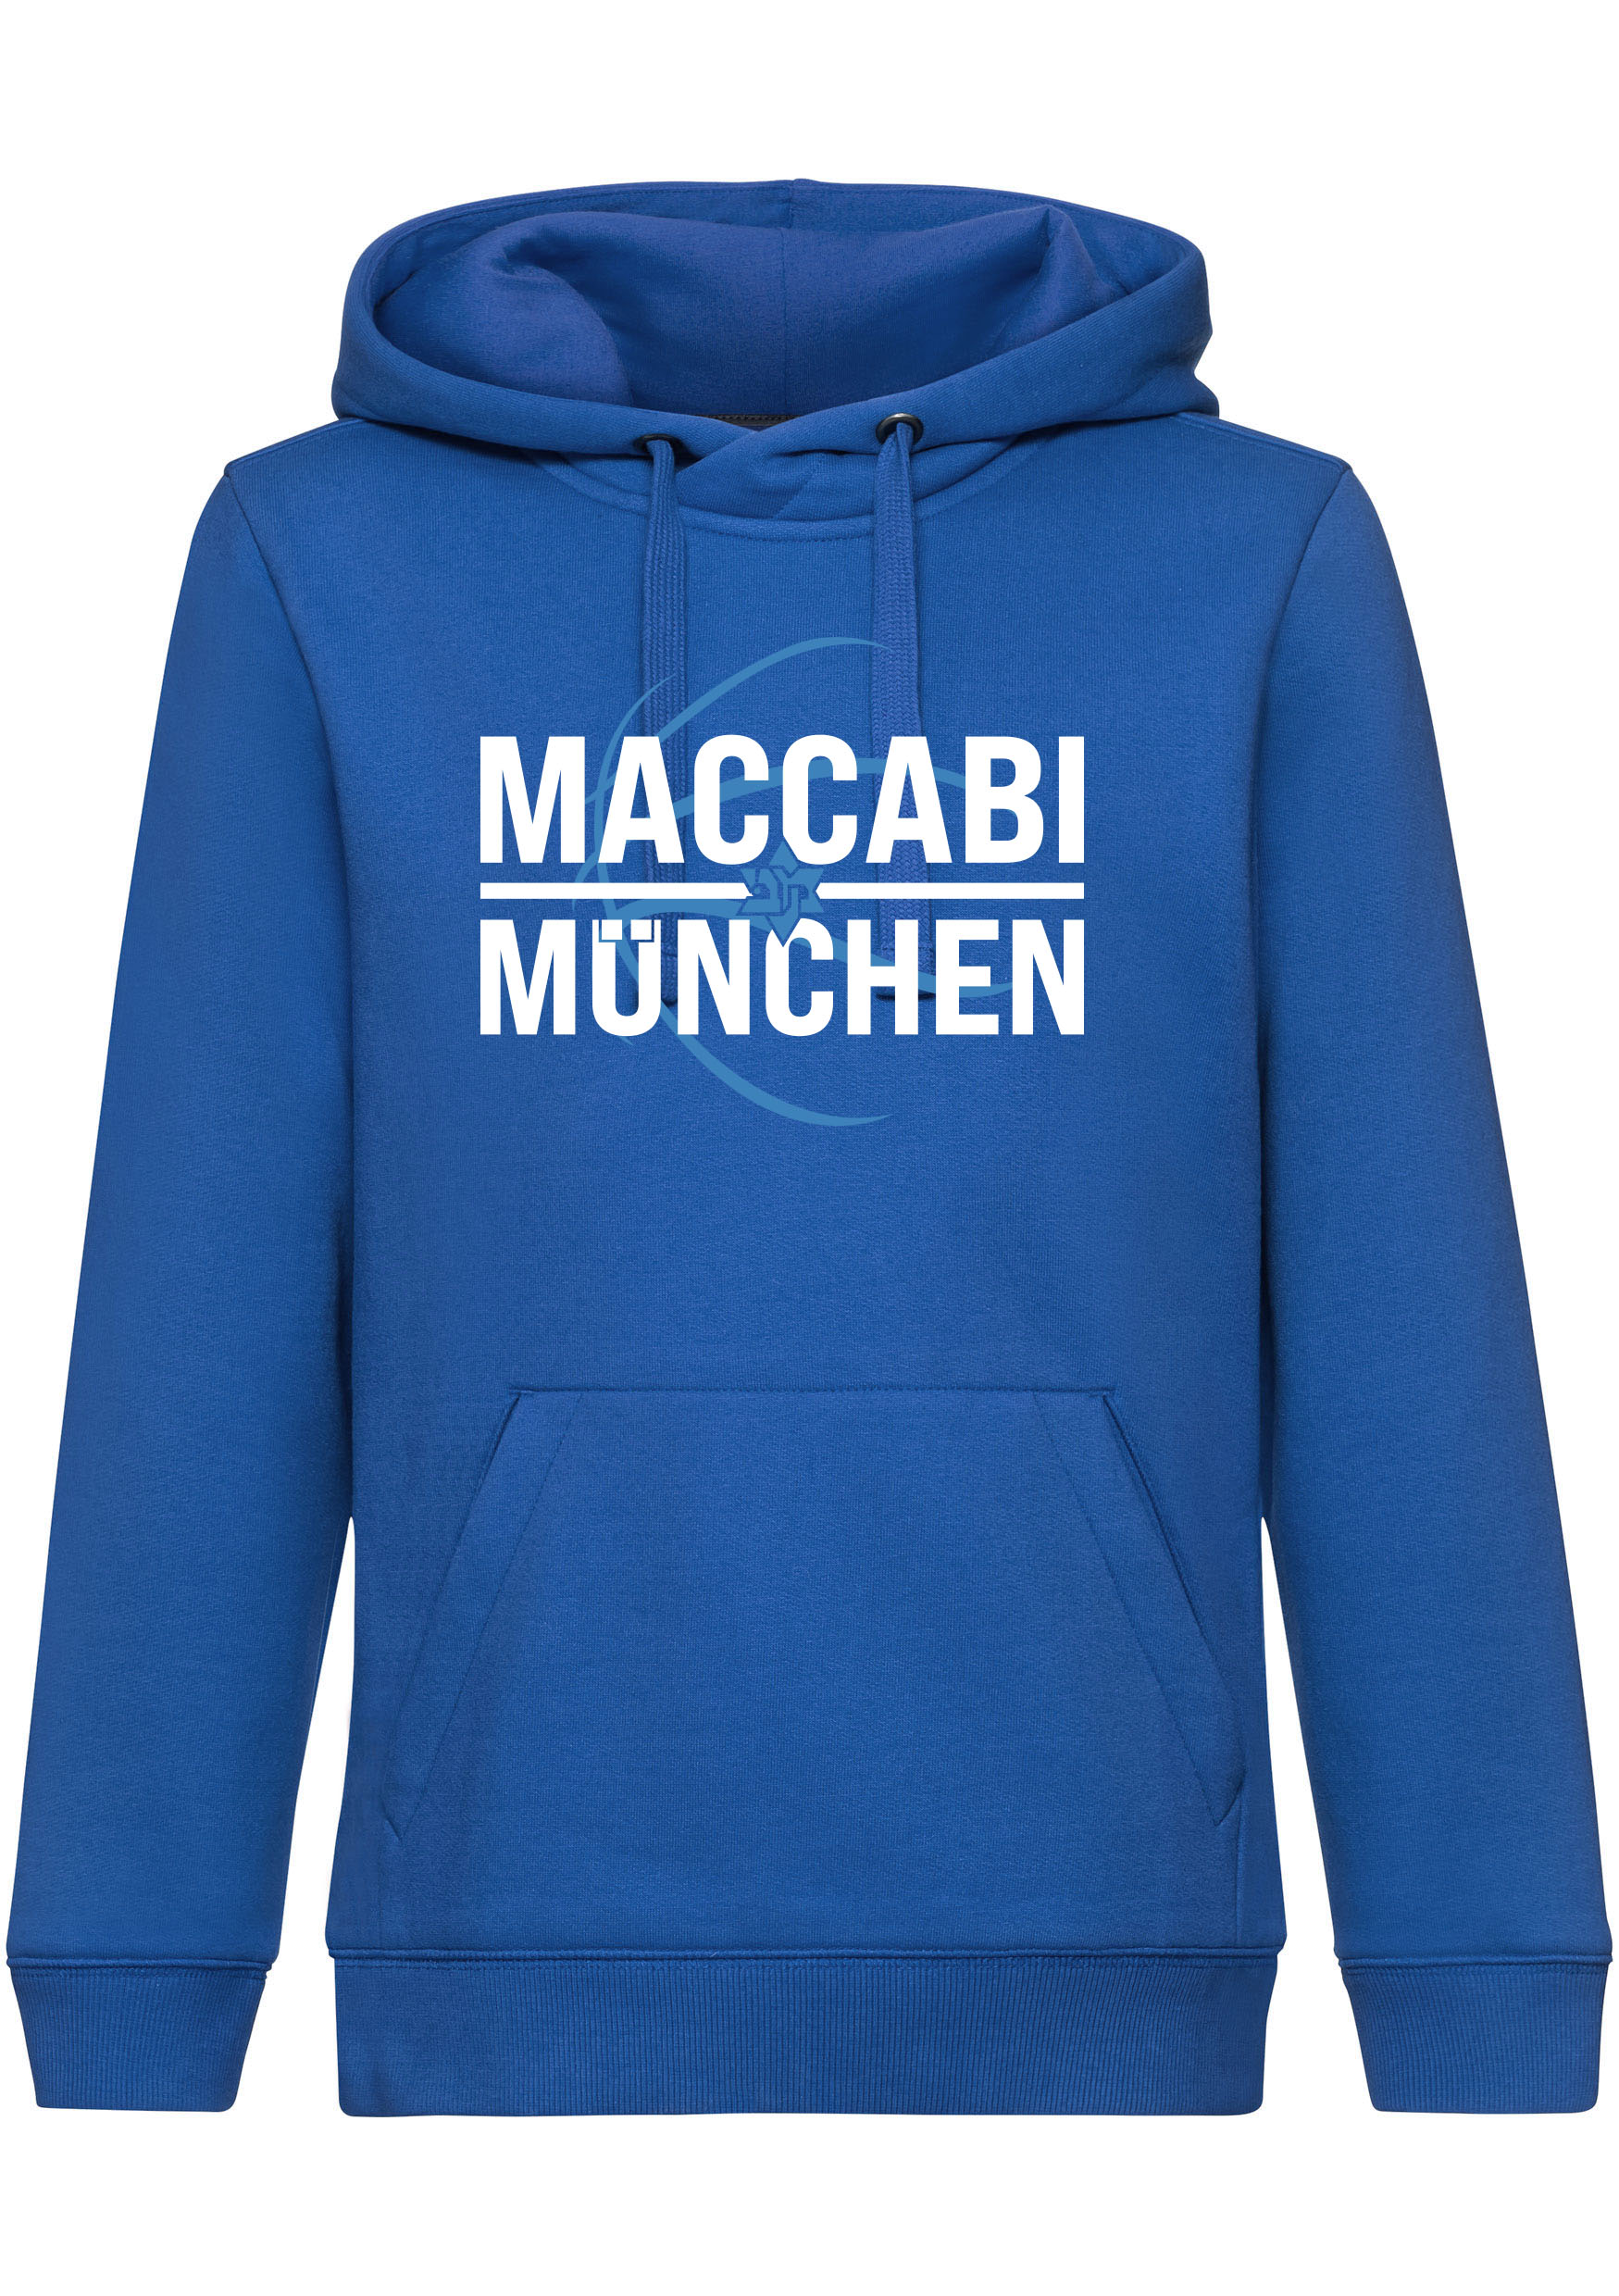 Maccabi München Hoodie blau